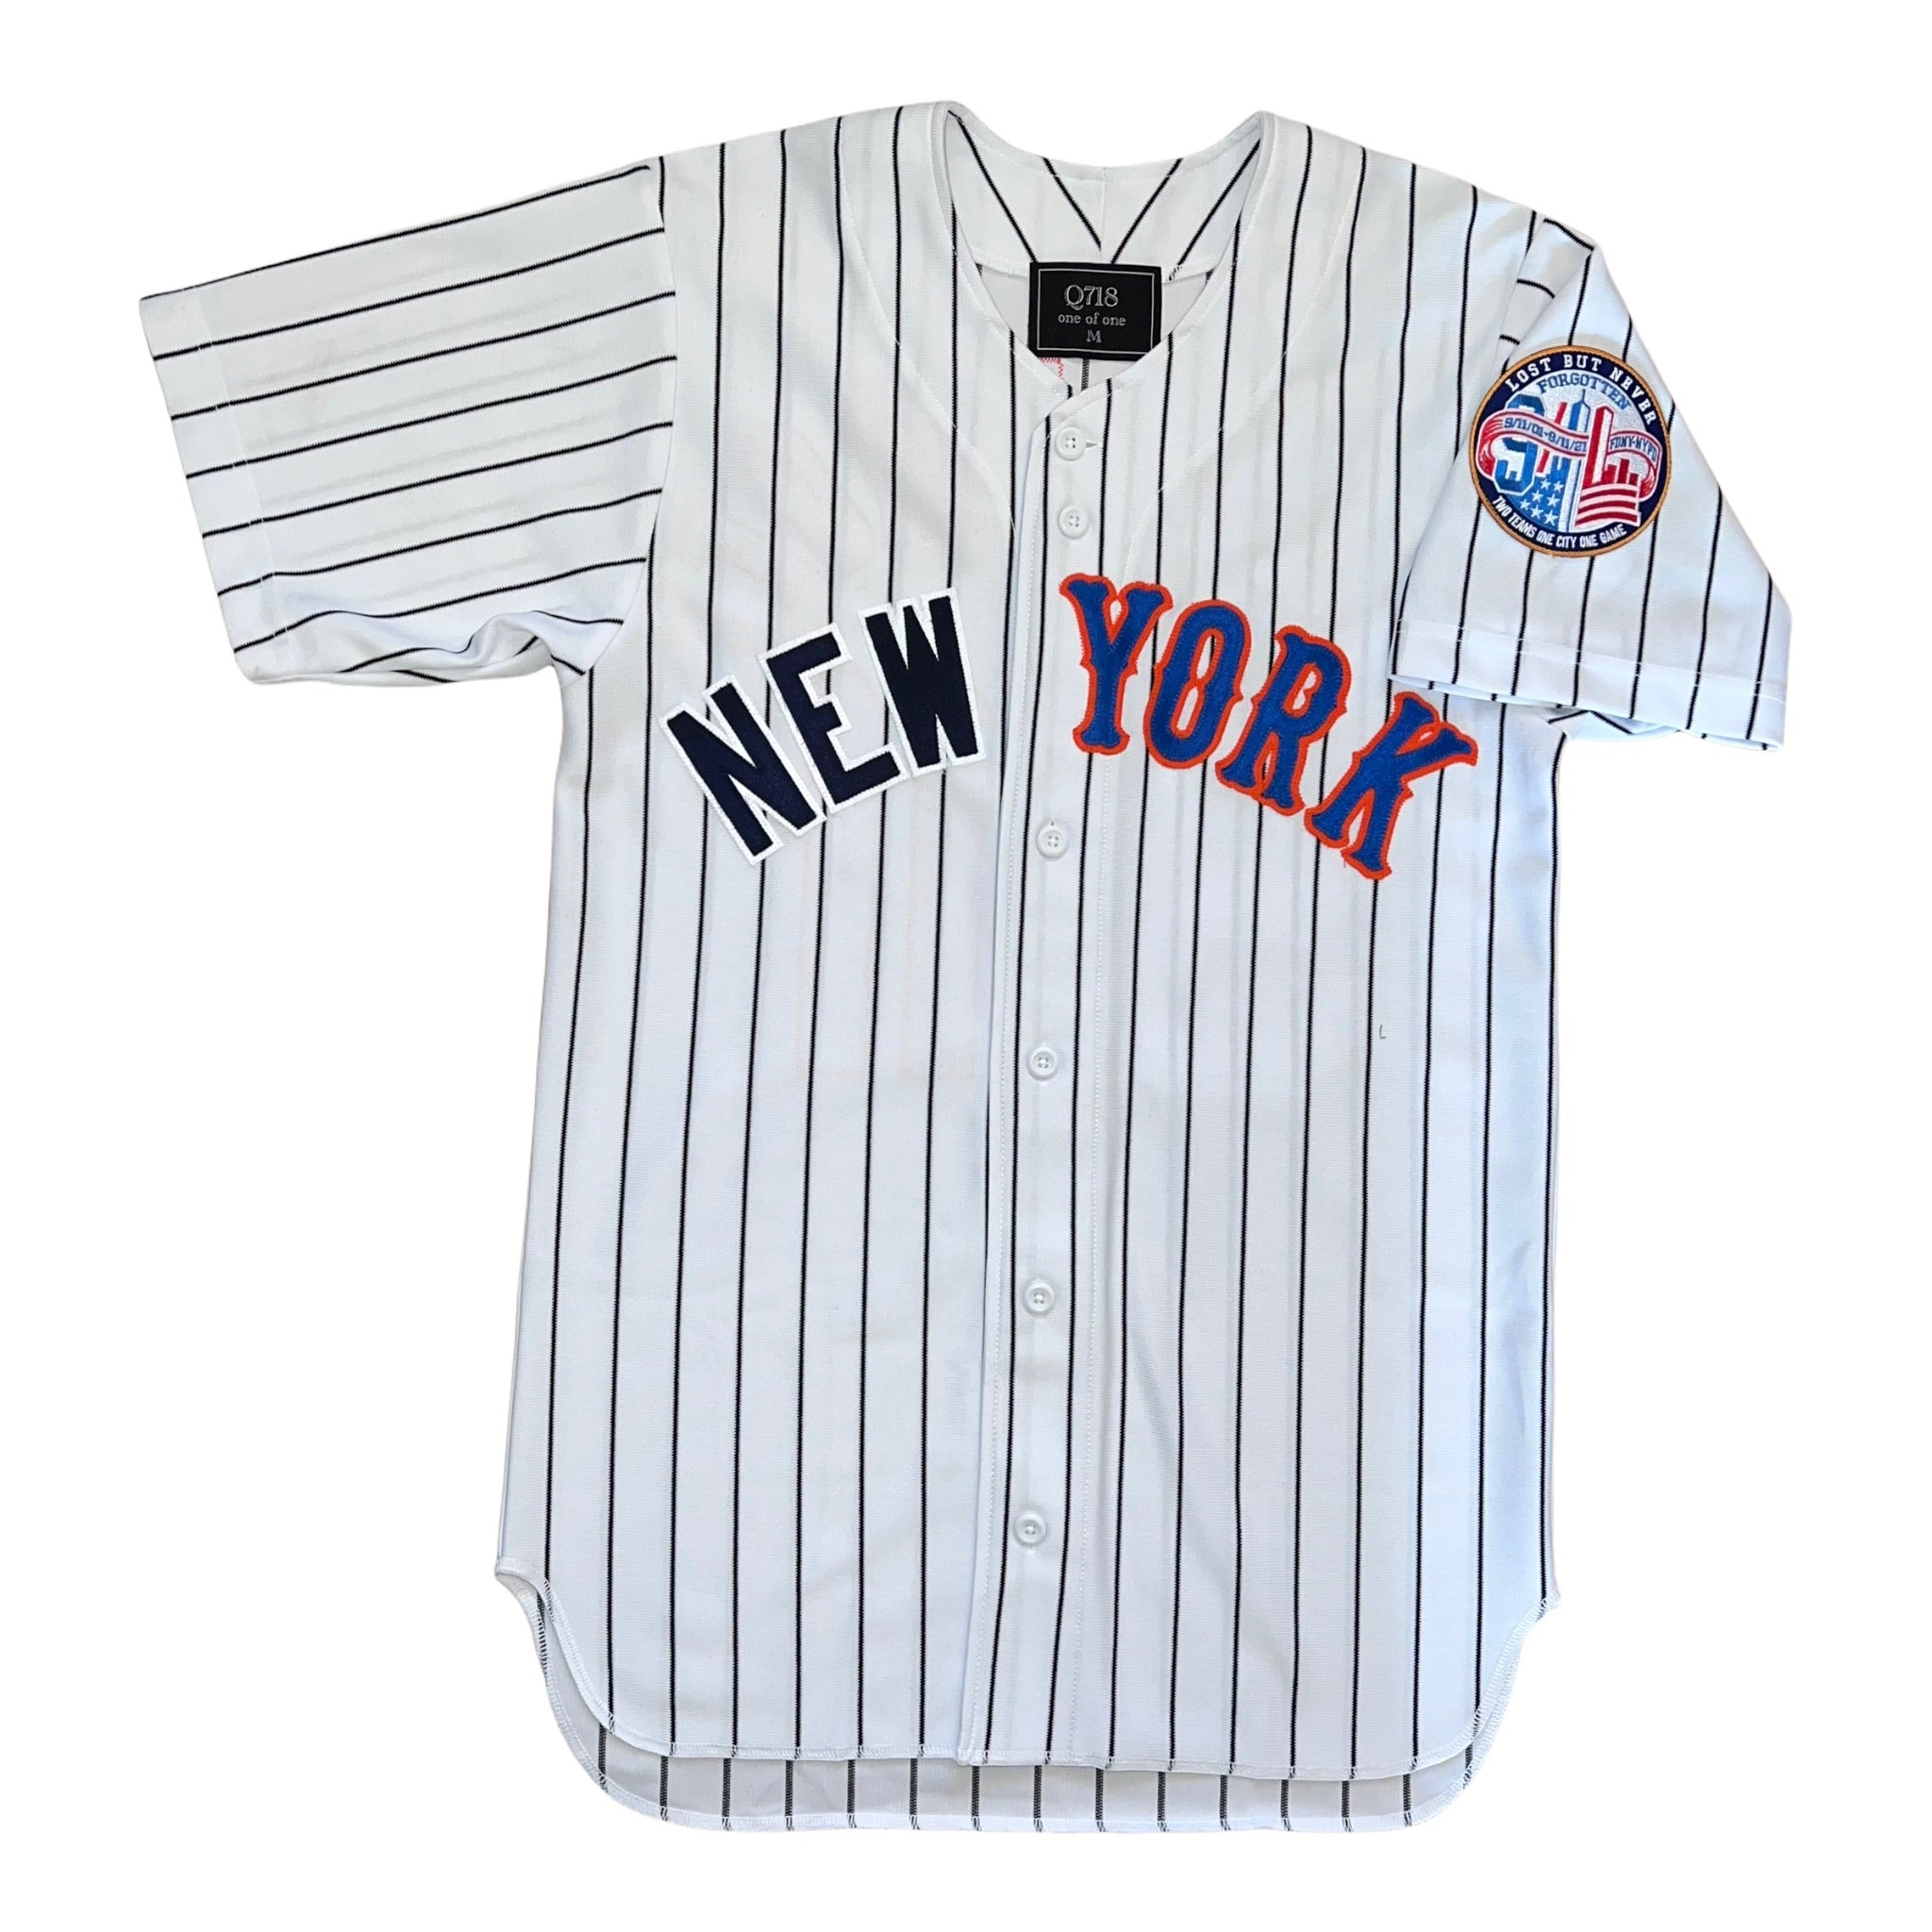 NY x Never Forget 9/11 Baseball Jersey – Q718